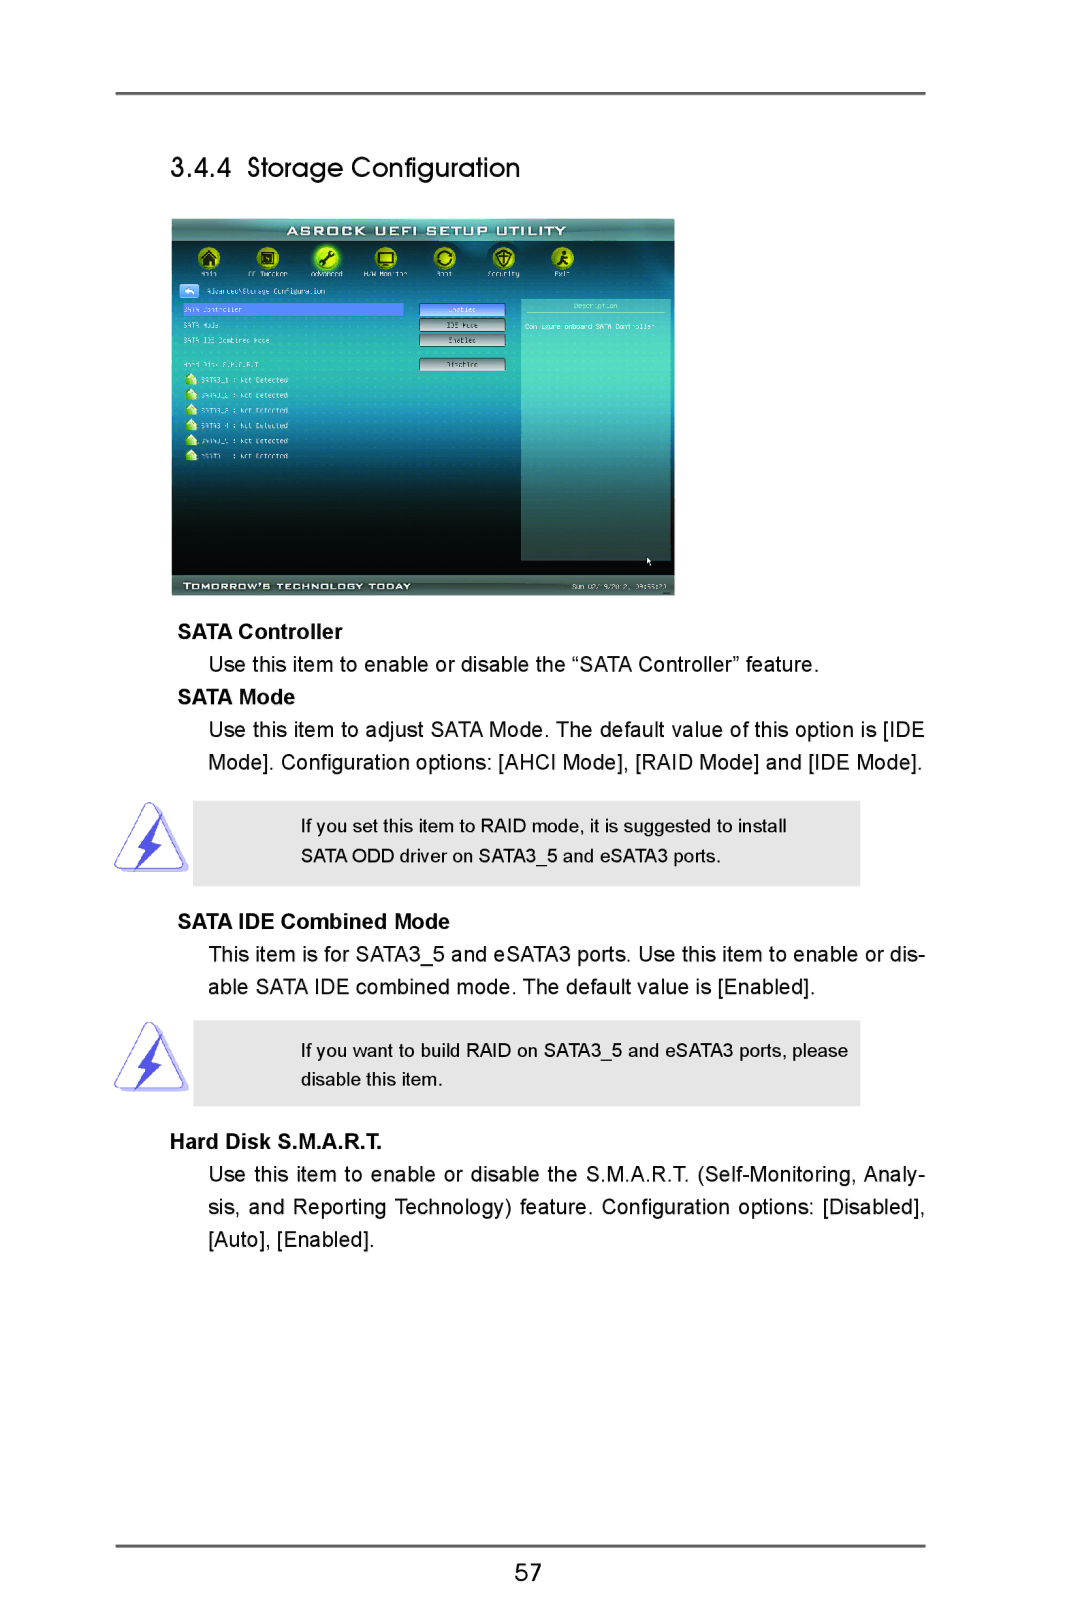 ASRock A75 Pro4/MVP manual Storage Configuration, Sata Controller, Sata Mode, Sata IDE Combined Mode, Hard Disk S.M.A.R.T 